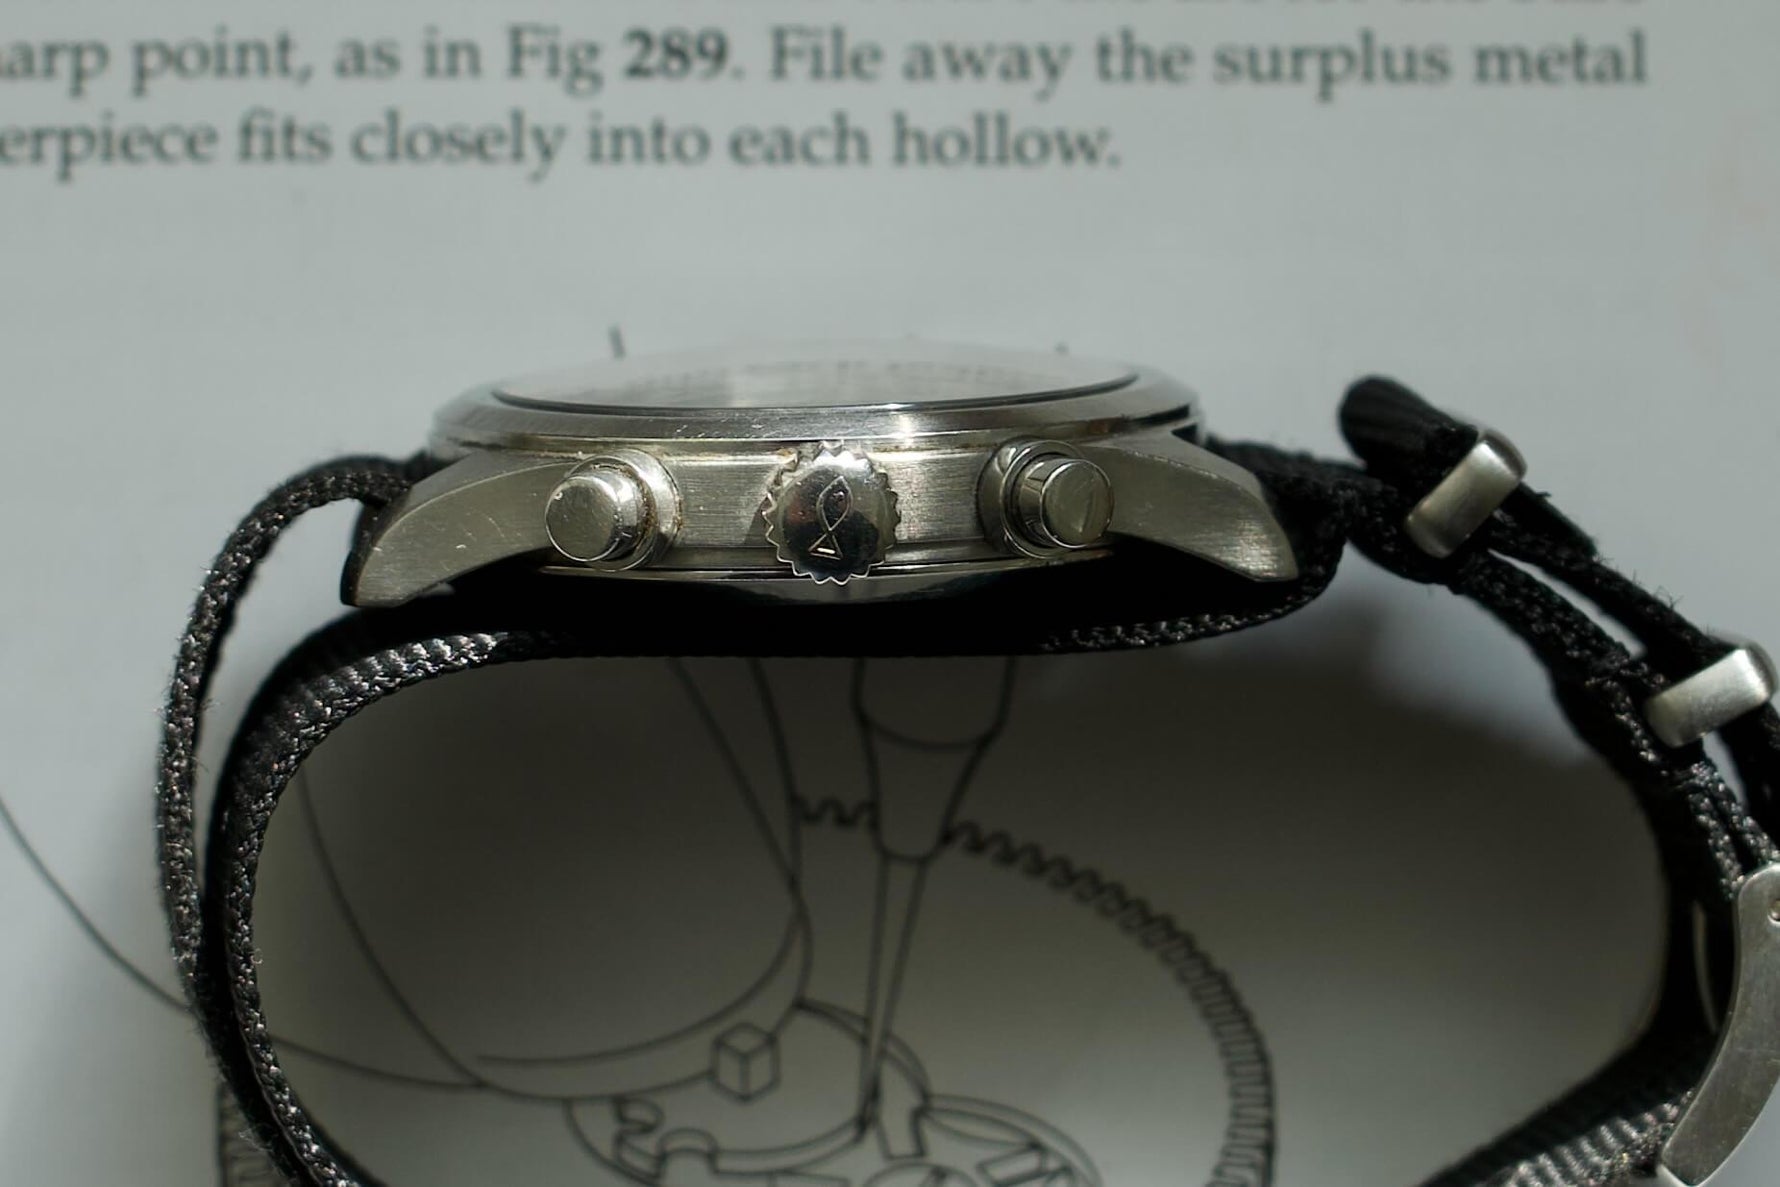 SOLDOUT: IWC Schaffhausen Flieger Chronograph Pilot 3741 Men Watch - WearingTime Luxury Watches